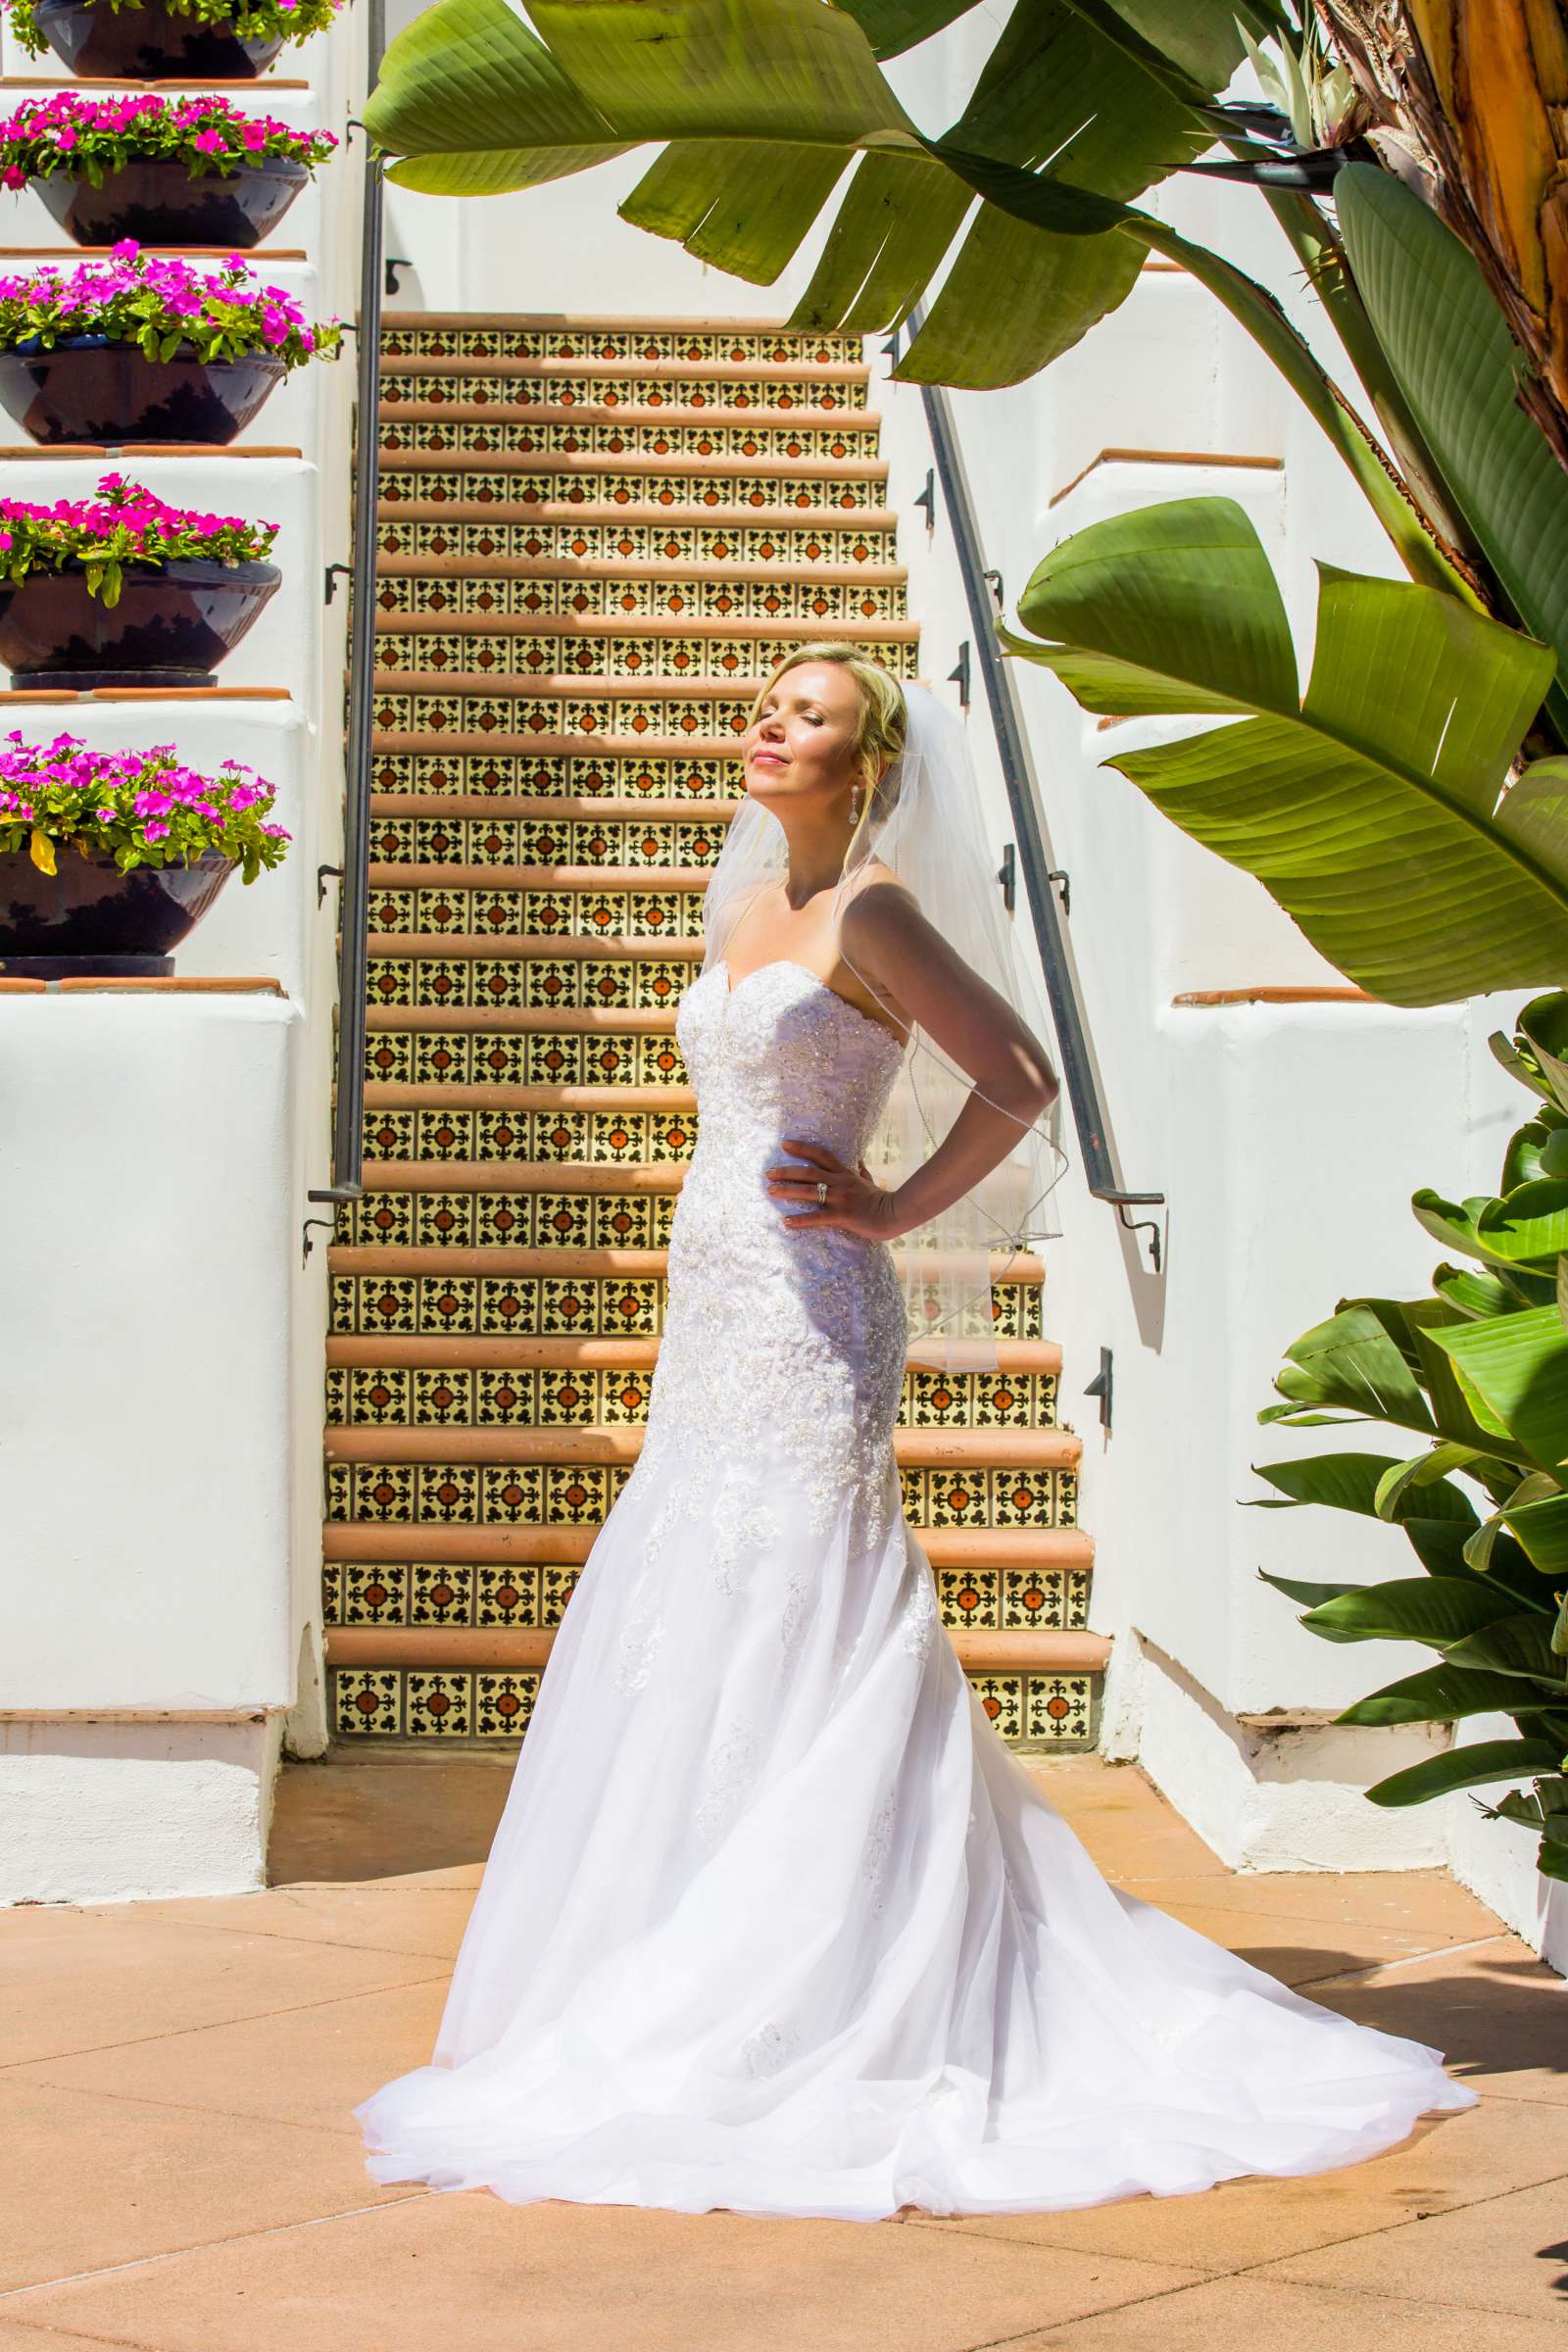 Omni La Costa Resort & Spa Wedding coordinated by Elements of Style, Irina and Brett Wedding Photo #8 by True Photography